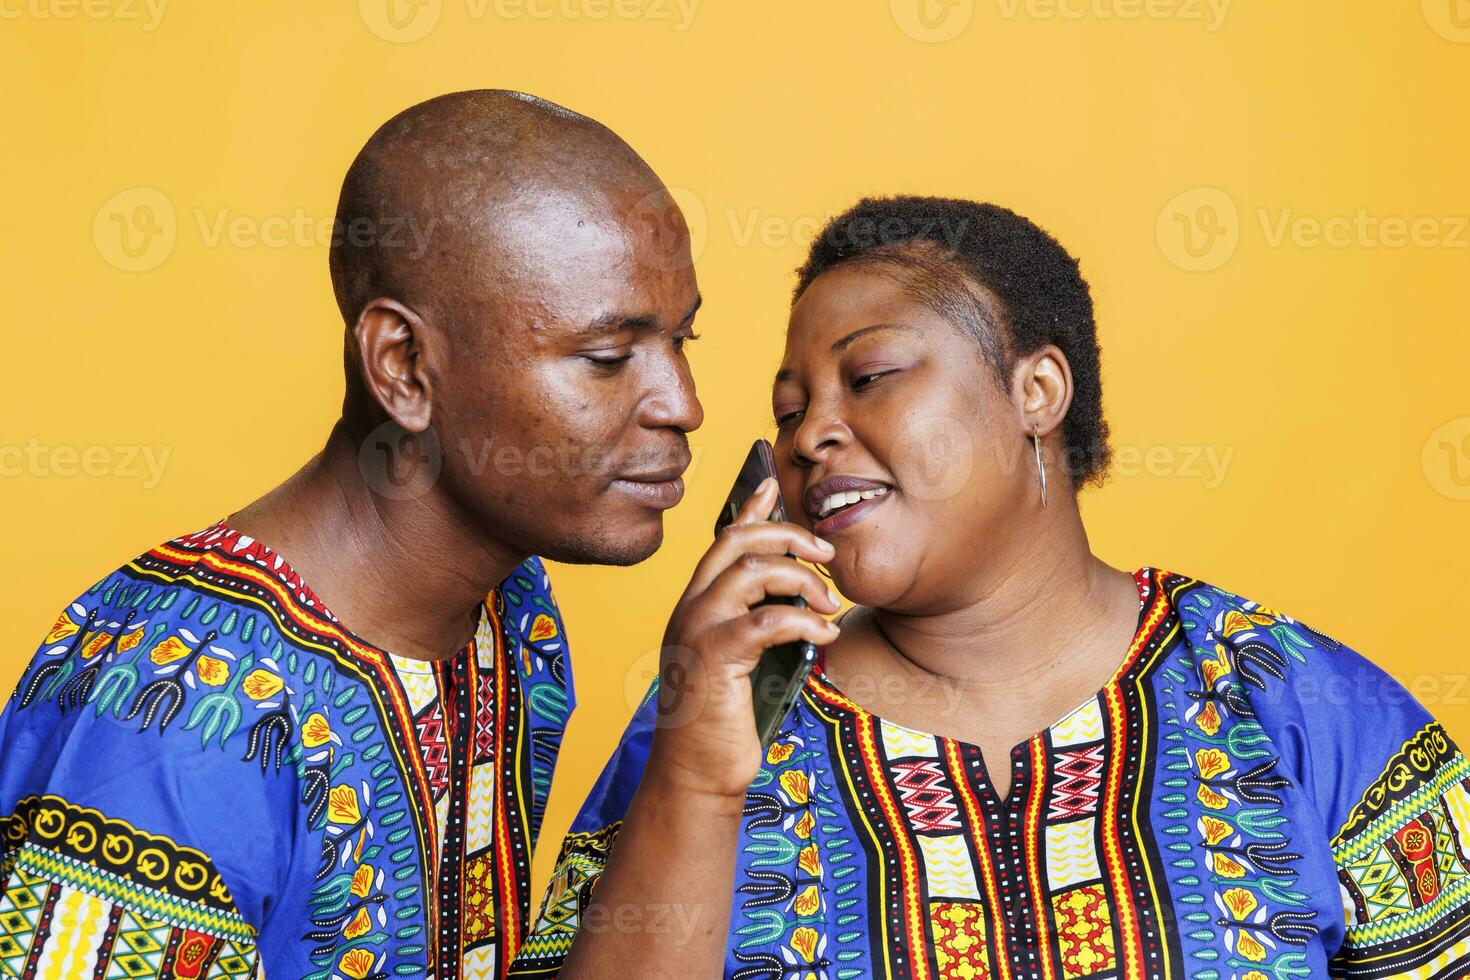 Mens en vrouw paar gebruik makend van mobiel telefoon net zo microfoon. Afrikaanse Amerikaans zangers het zingen samen in smartphone microfoon, opname lied met telefoon stem opnemer toepassing foto